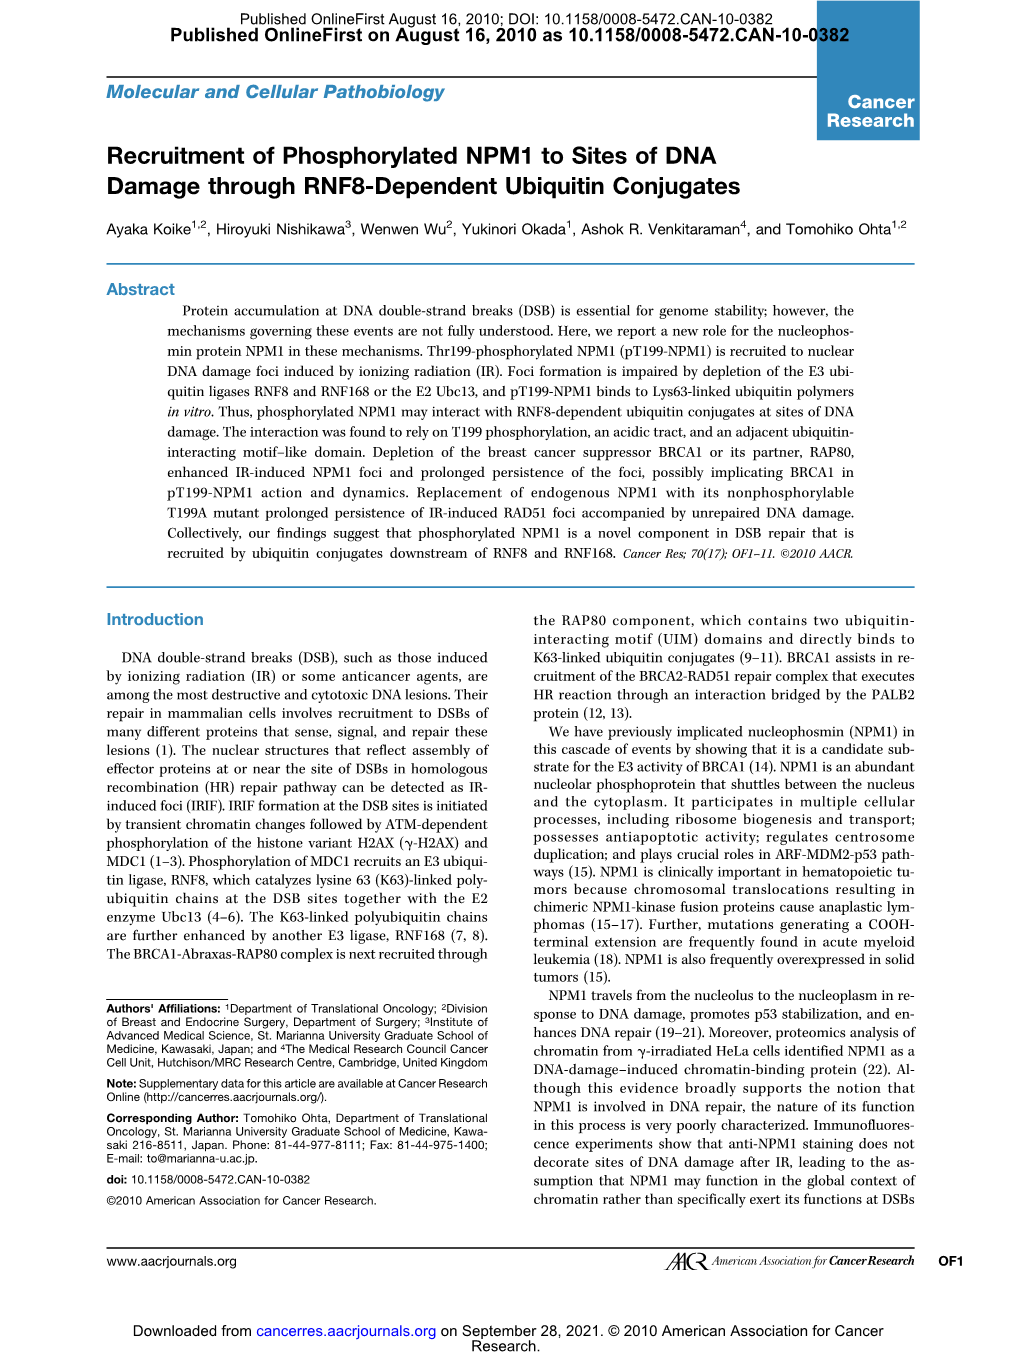 Recruitment of Phosphorylated NPM1 to Sites of DNA Damage Through RNF8-Dependent Ubiquitin Conjugates